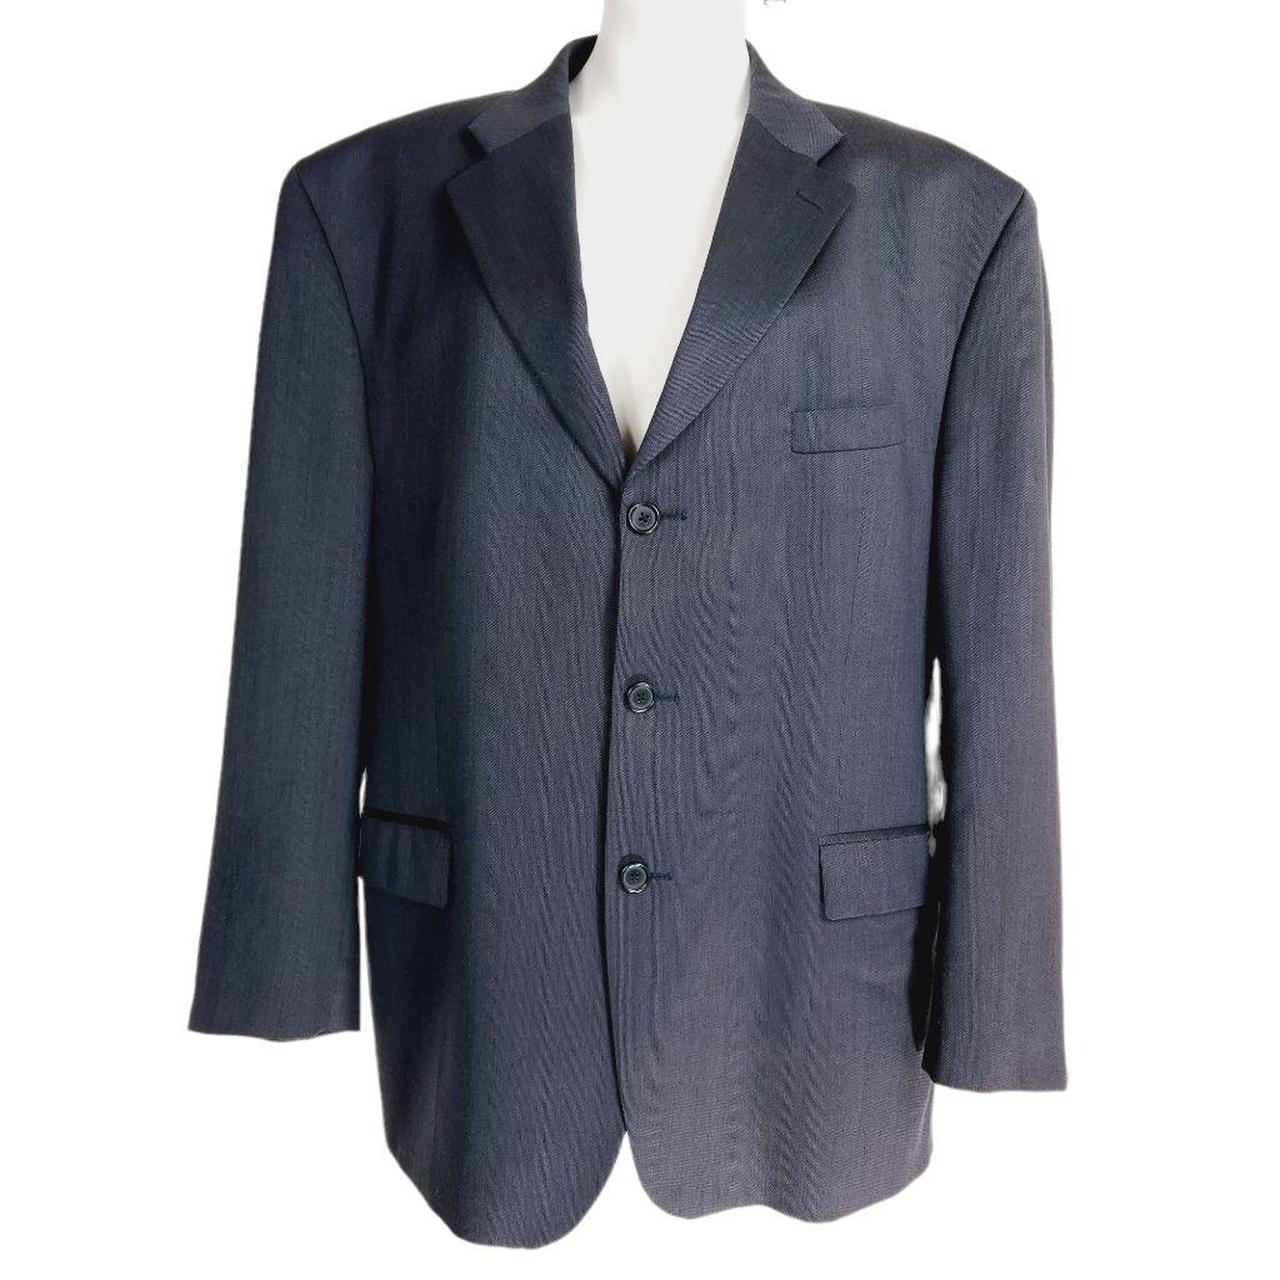 Product Image 1 - Kasper black blazer suit jacket